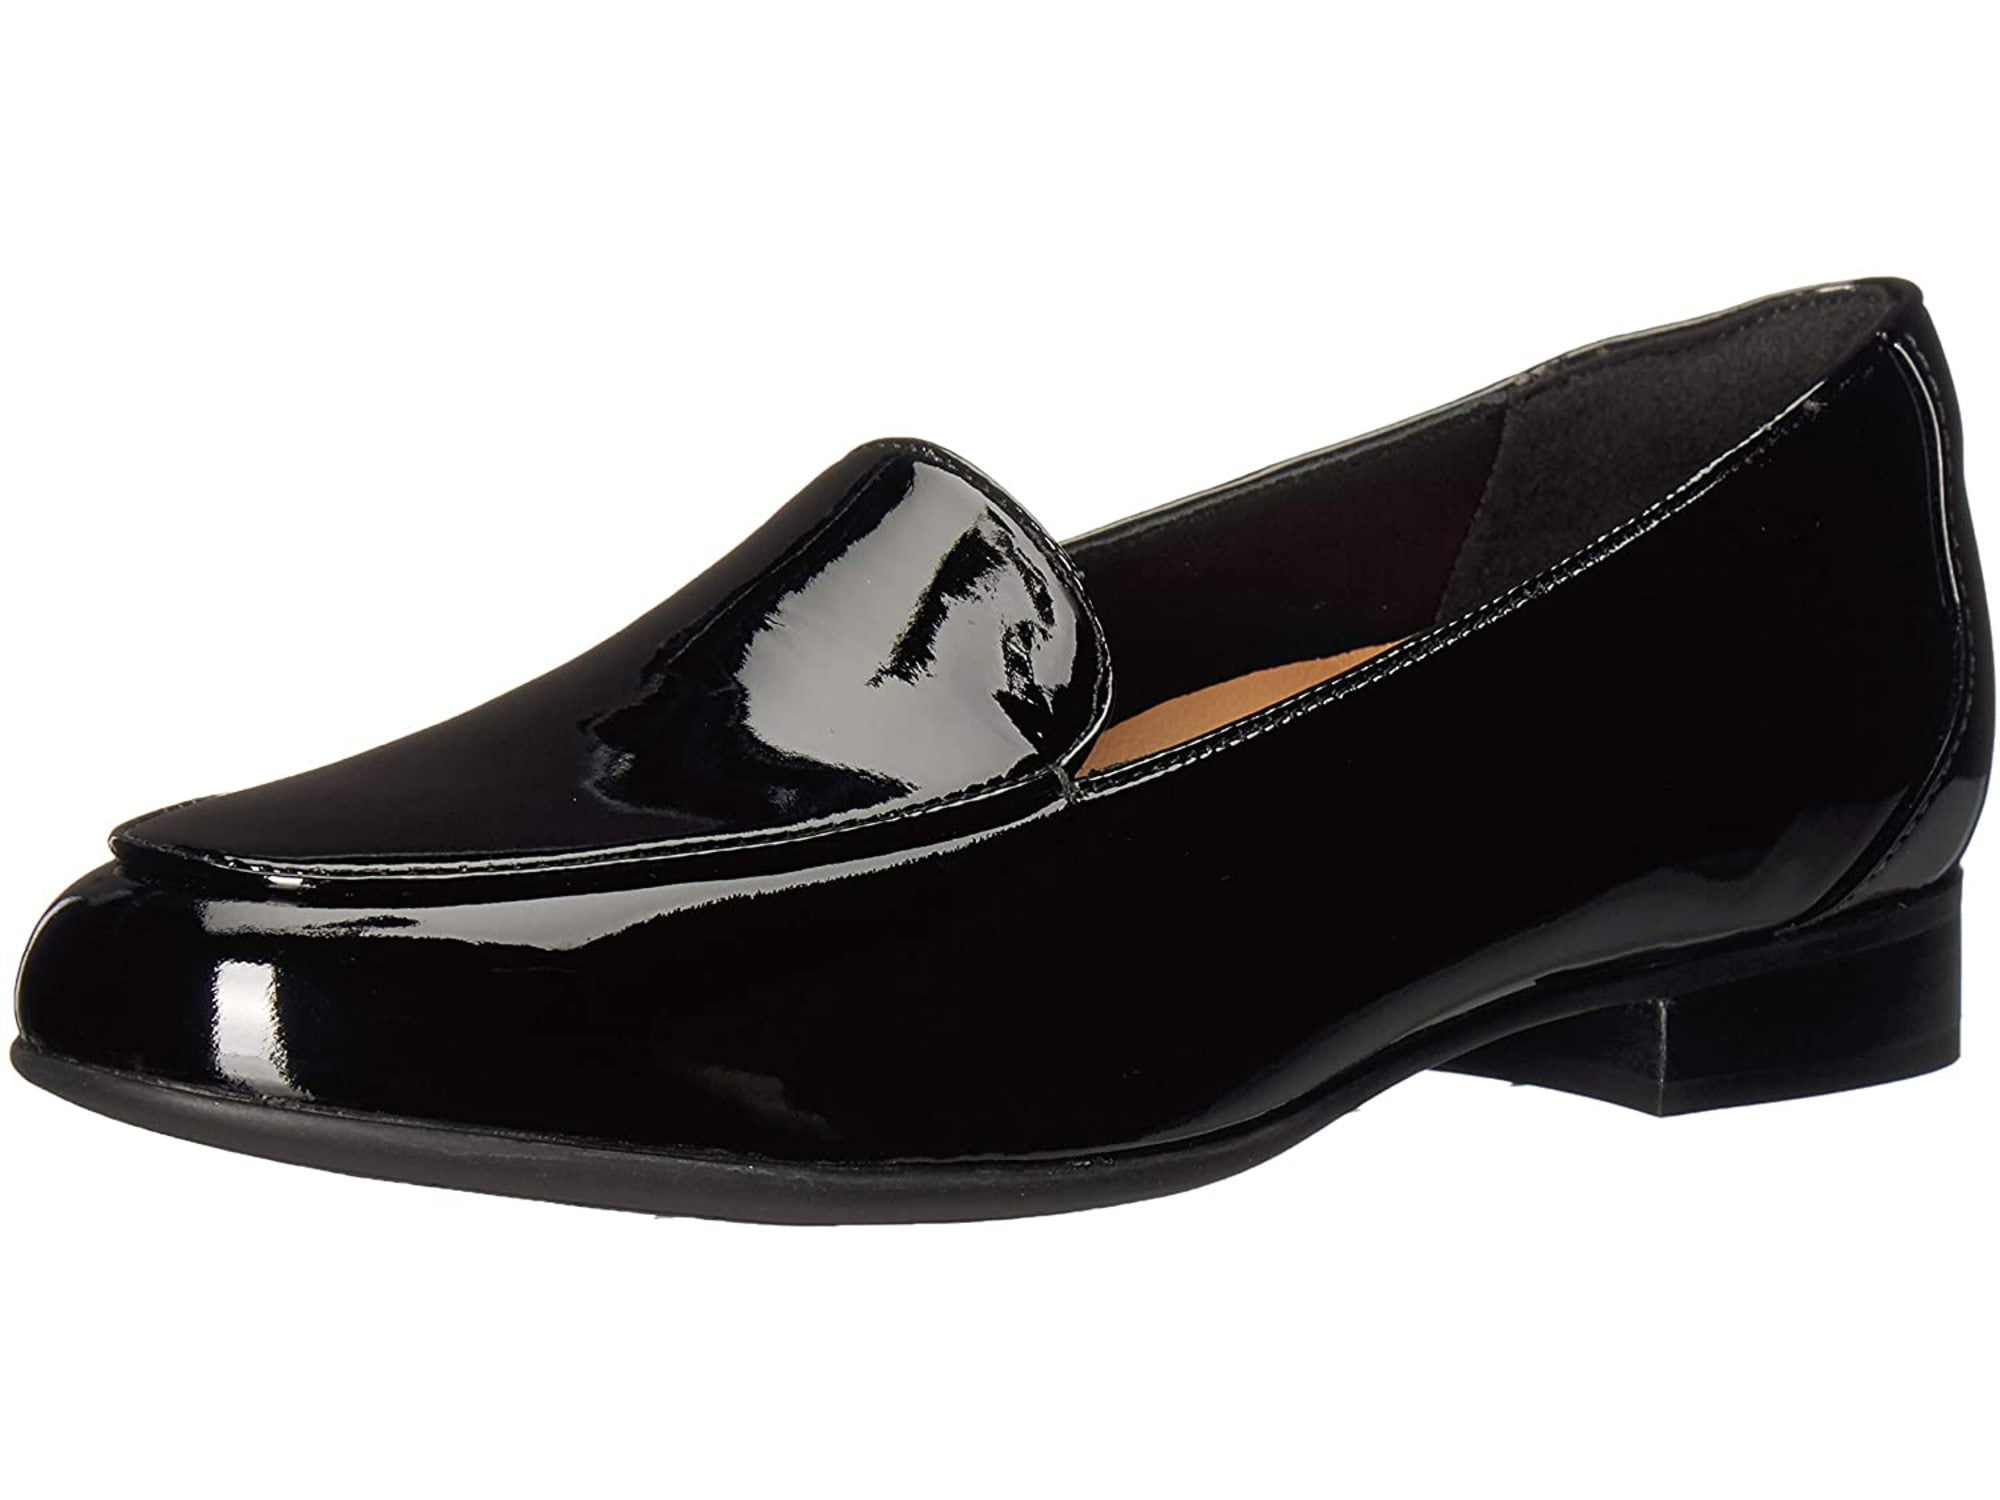 Clarks - Clarks Women's Un Blush Ease Loafer, Black, Size 8.5 - Walmart ...